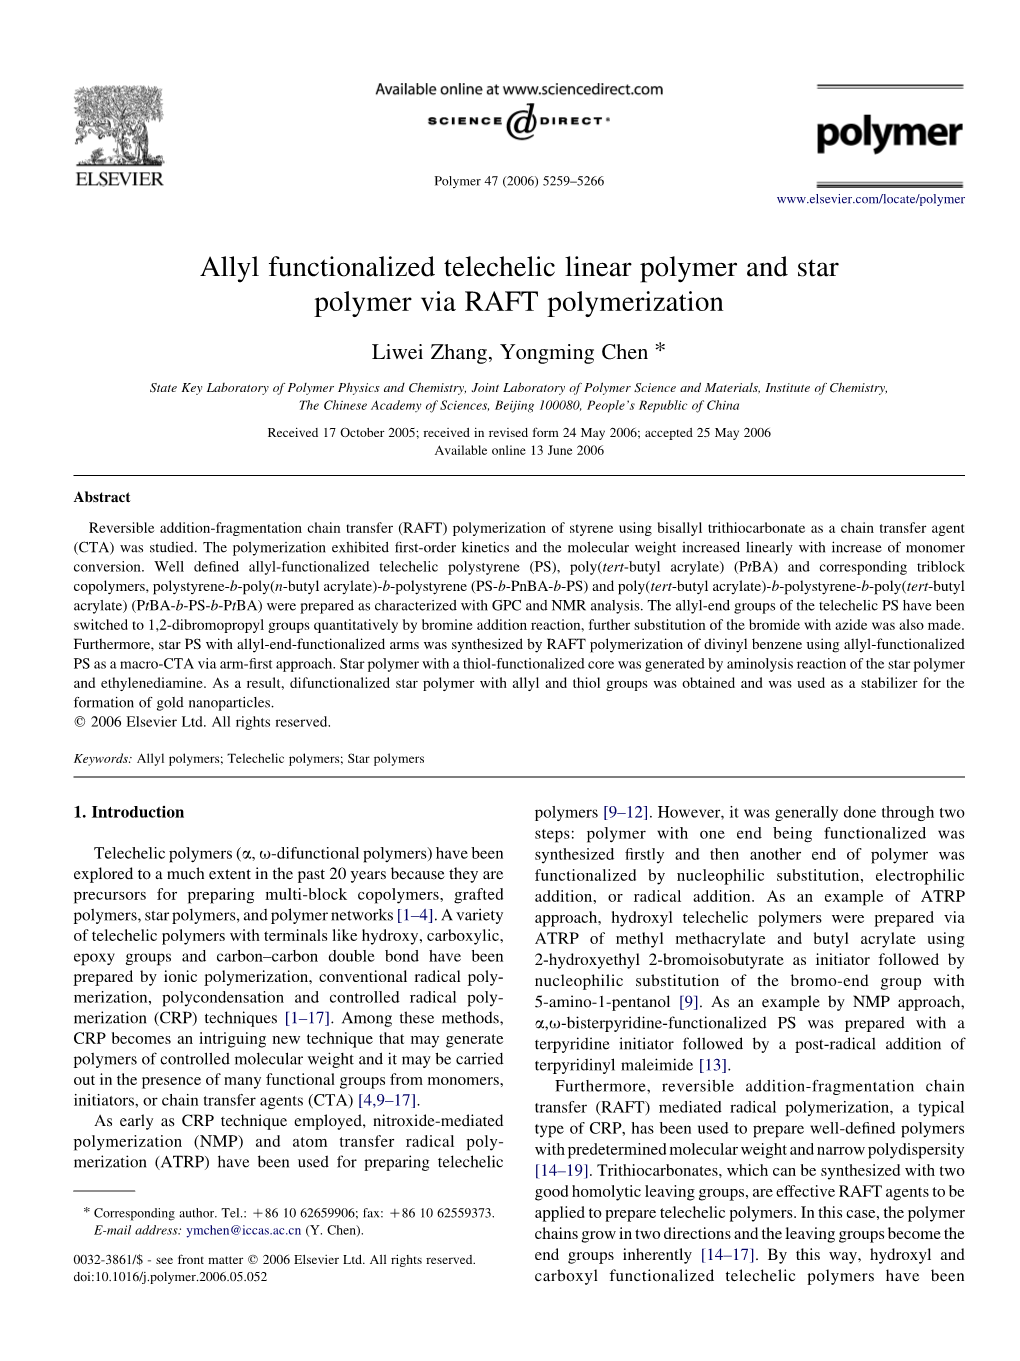 Allyl Functionalized Telechelic Linear Polymer and Star Polymer Via RAFT Polymerization